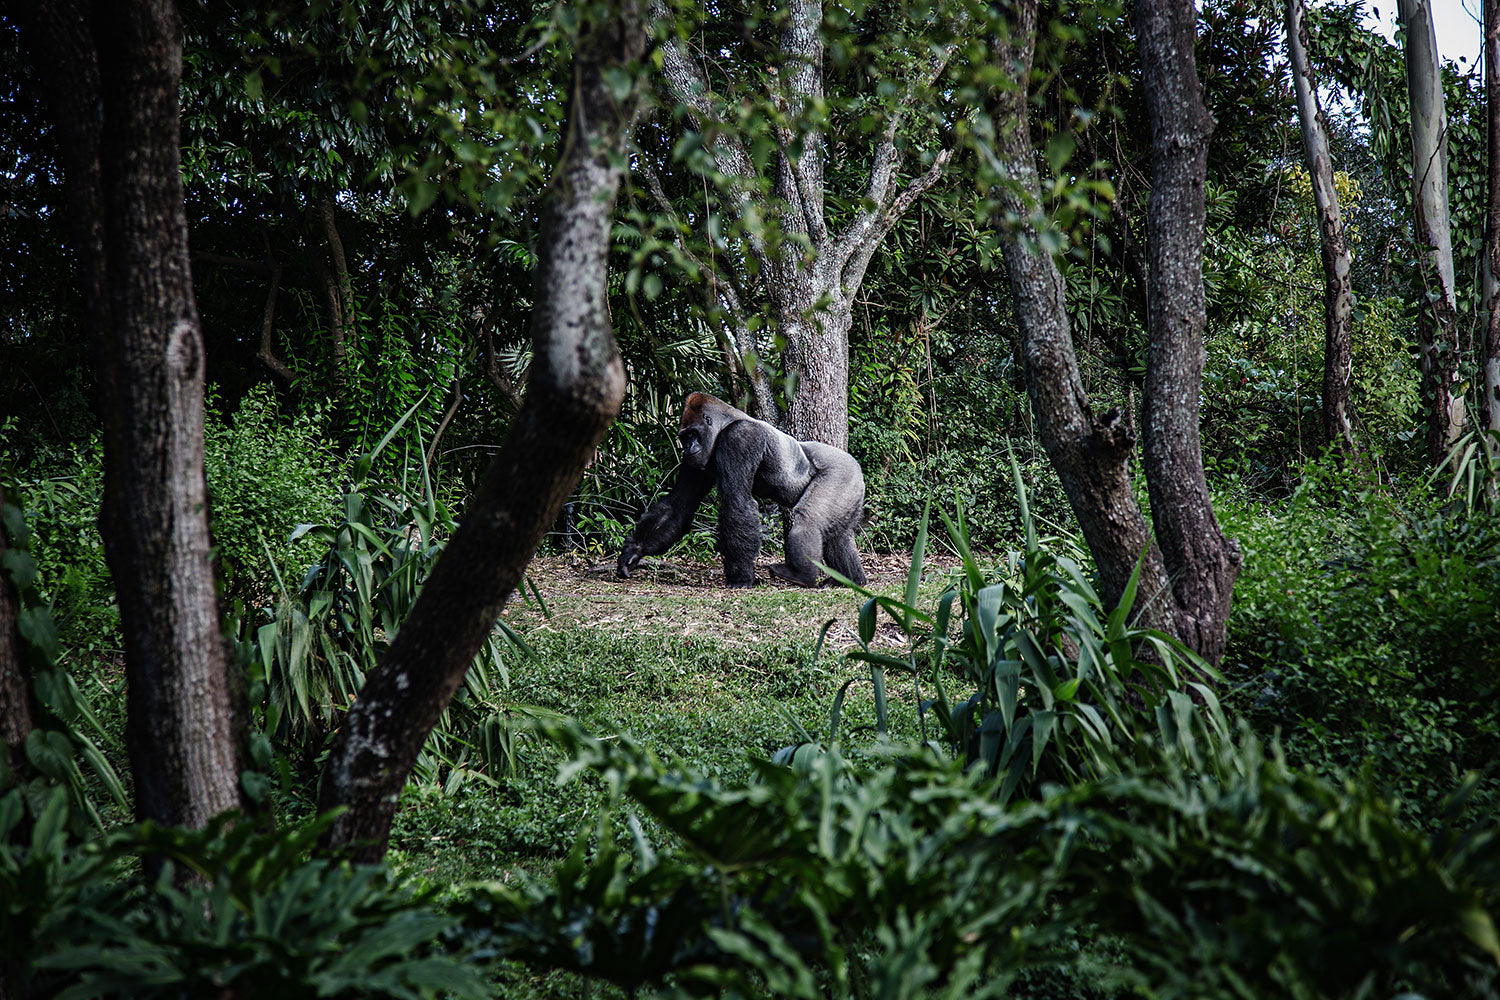 Gorilla in the Forest